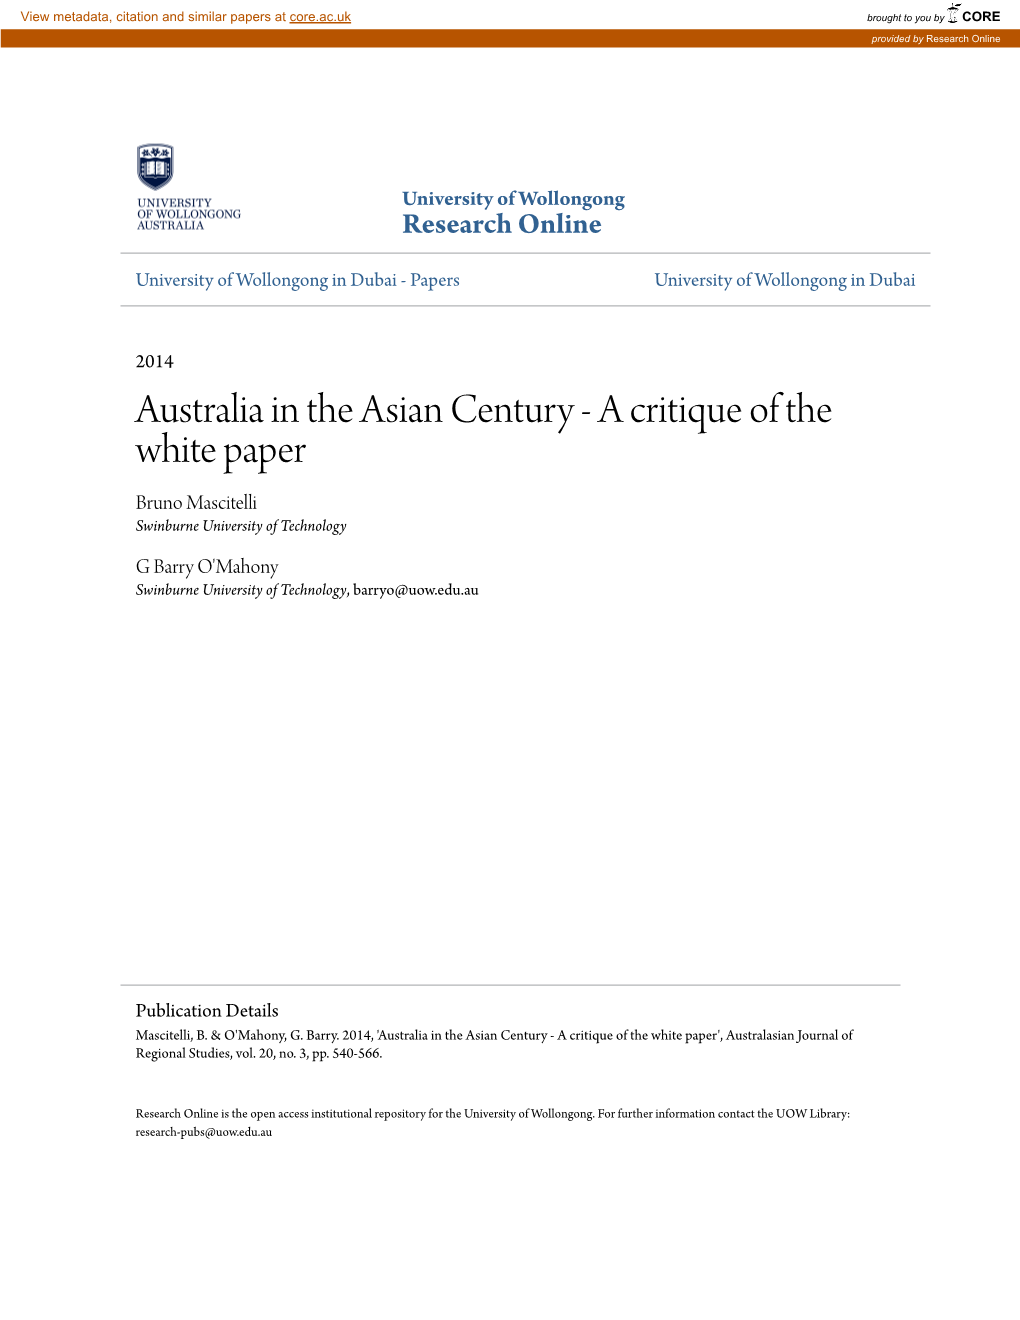 Australia in the Asian Century - a Critique of the White Paper Bruno Mascitelli Swinburne University of Technology